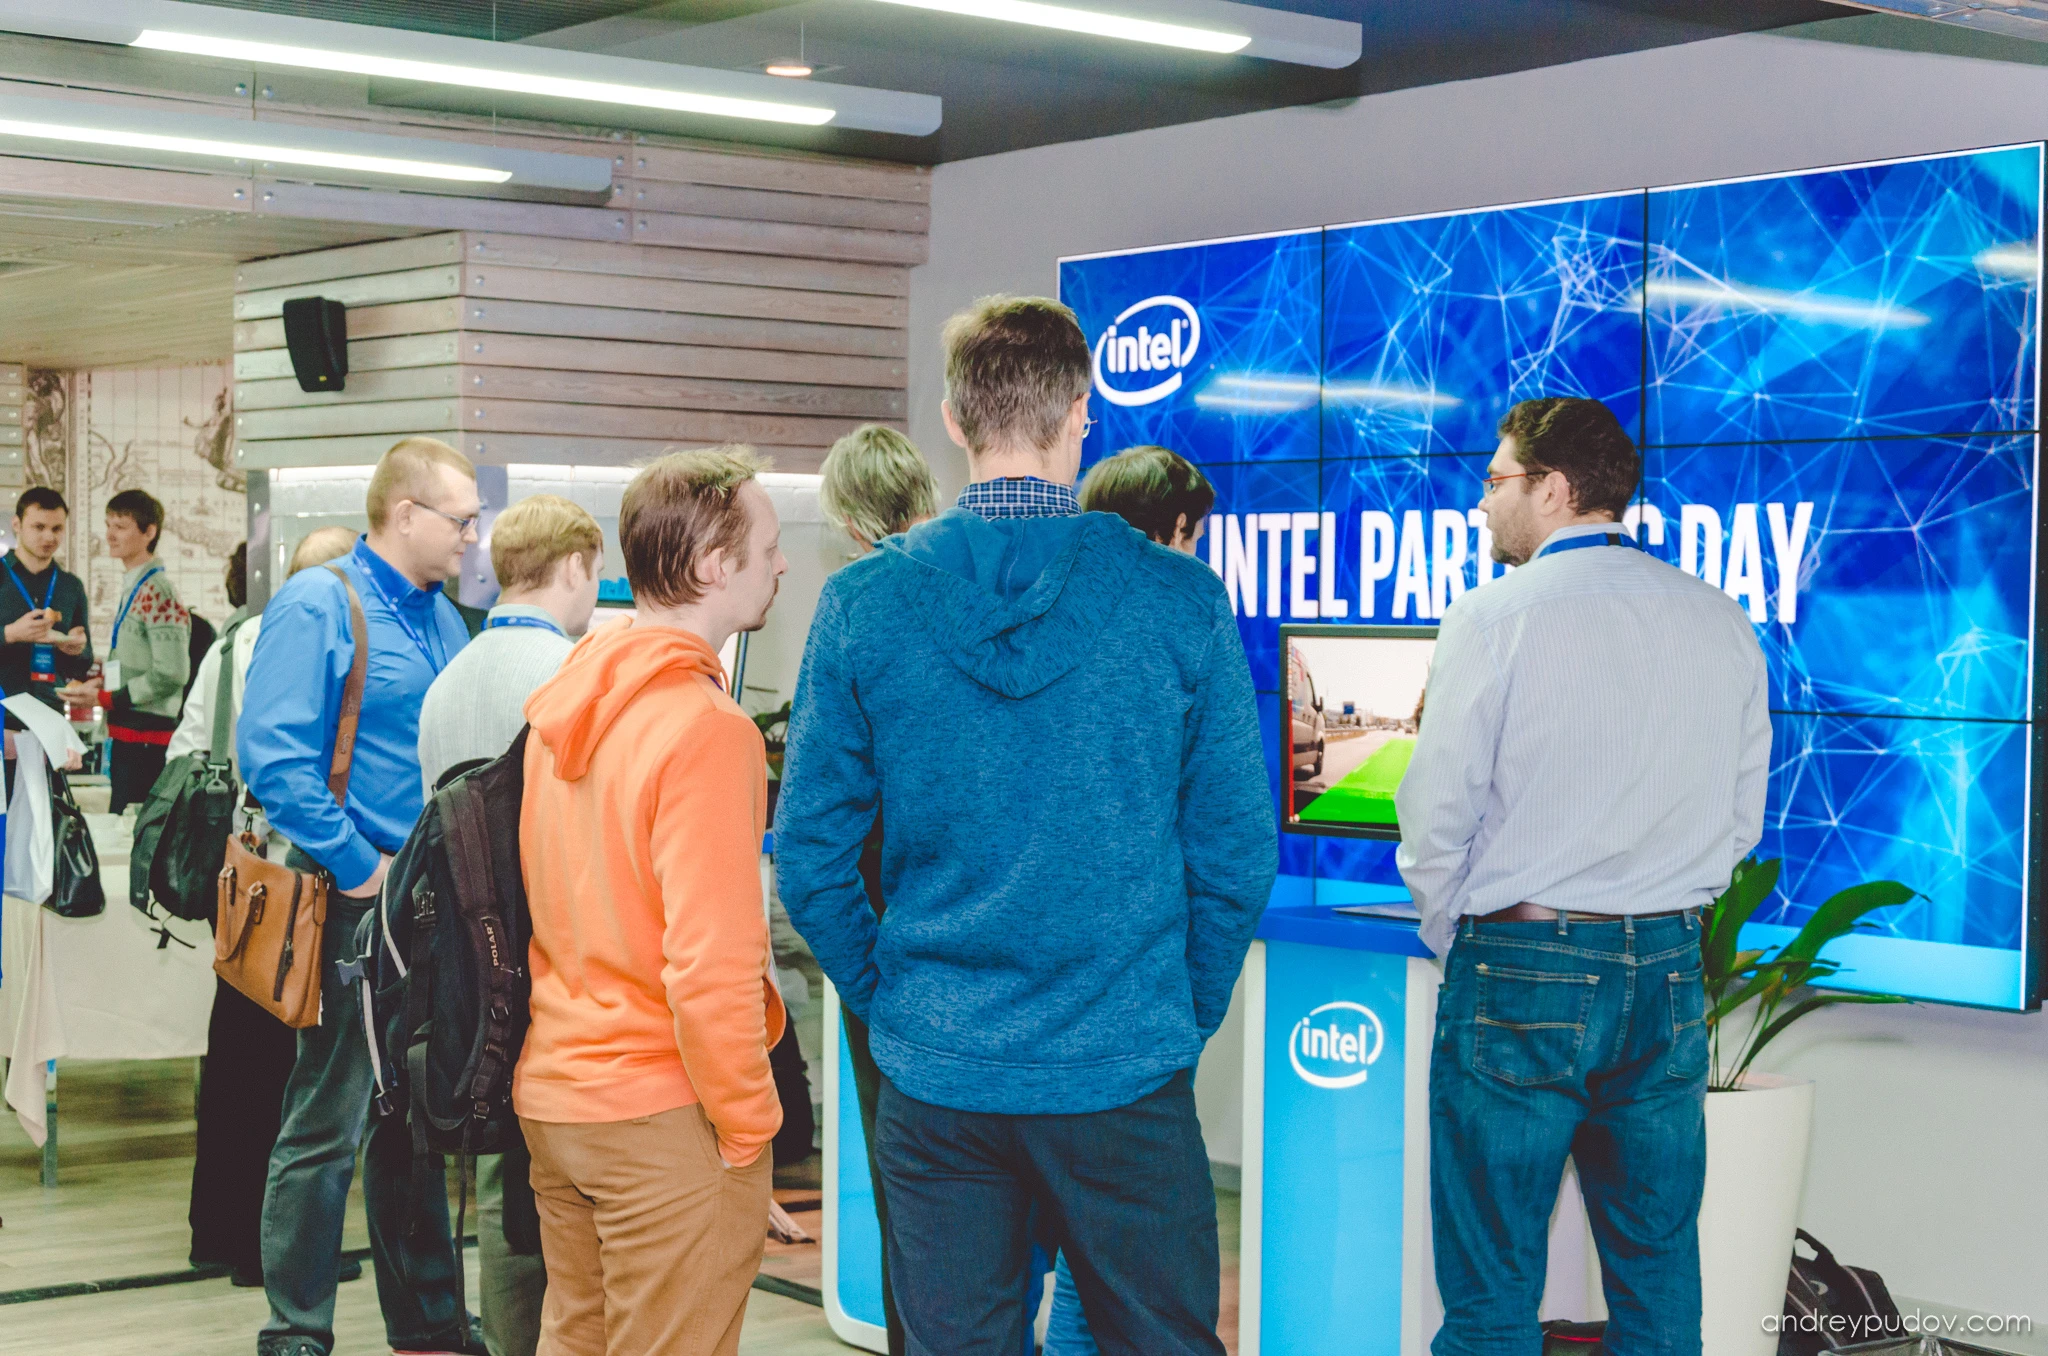 Intel Partners Day